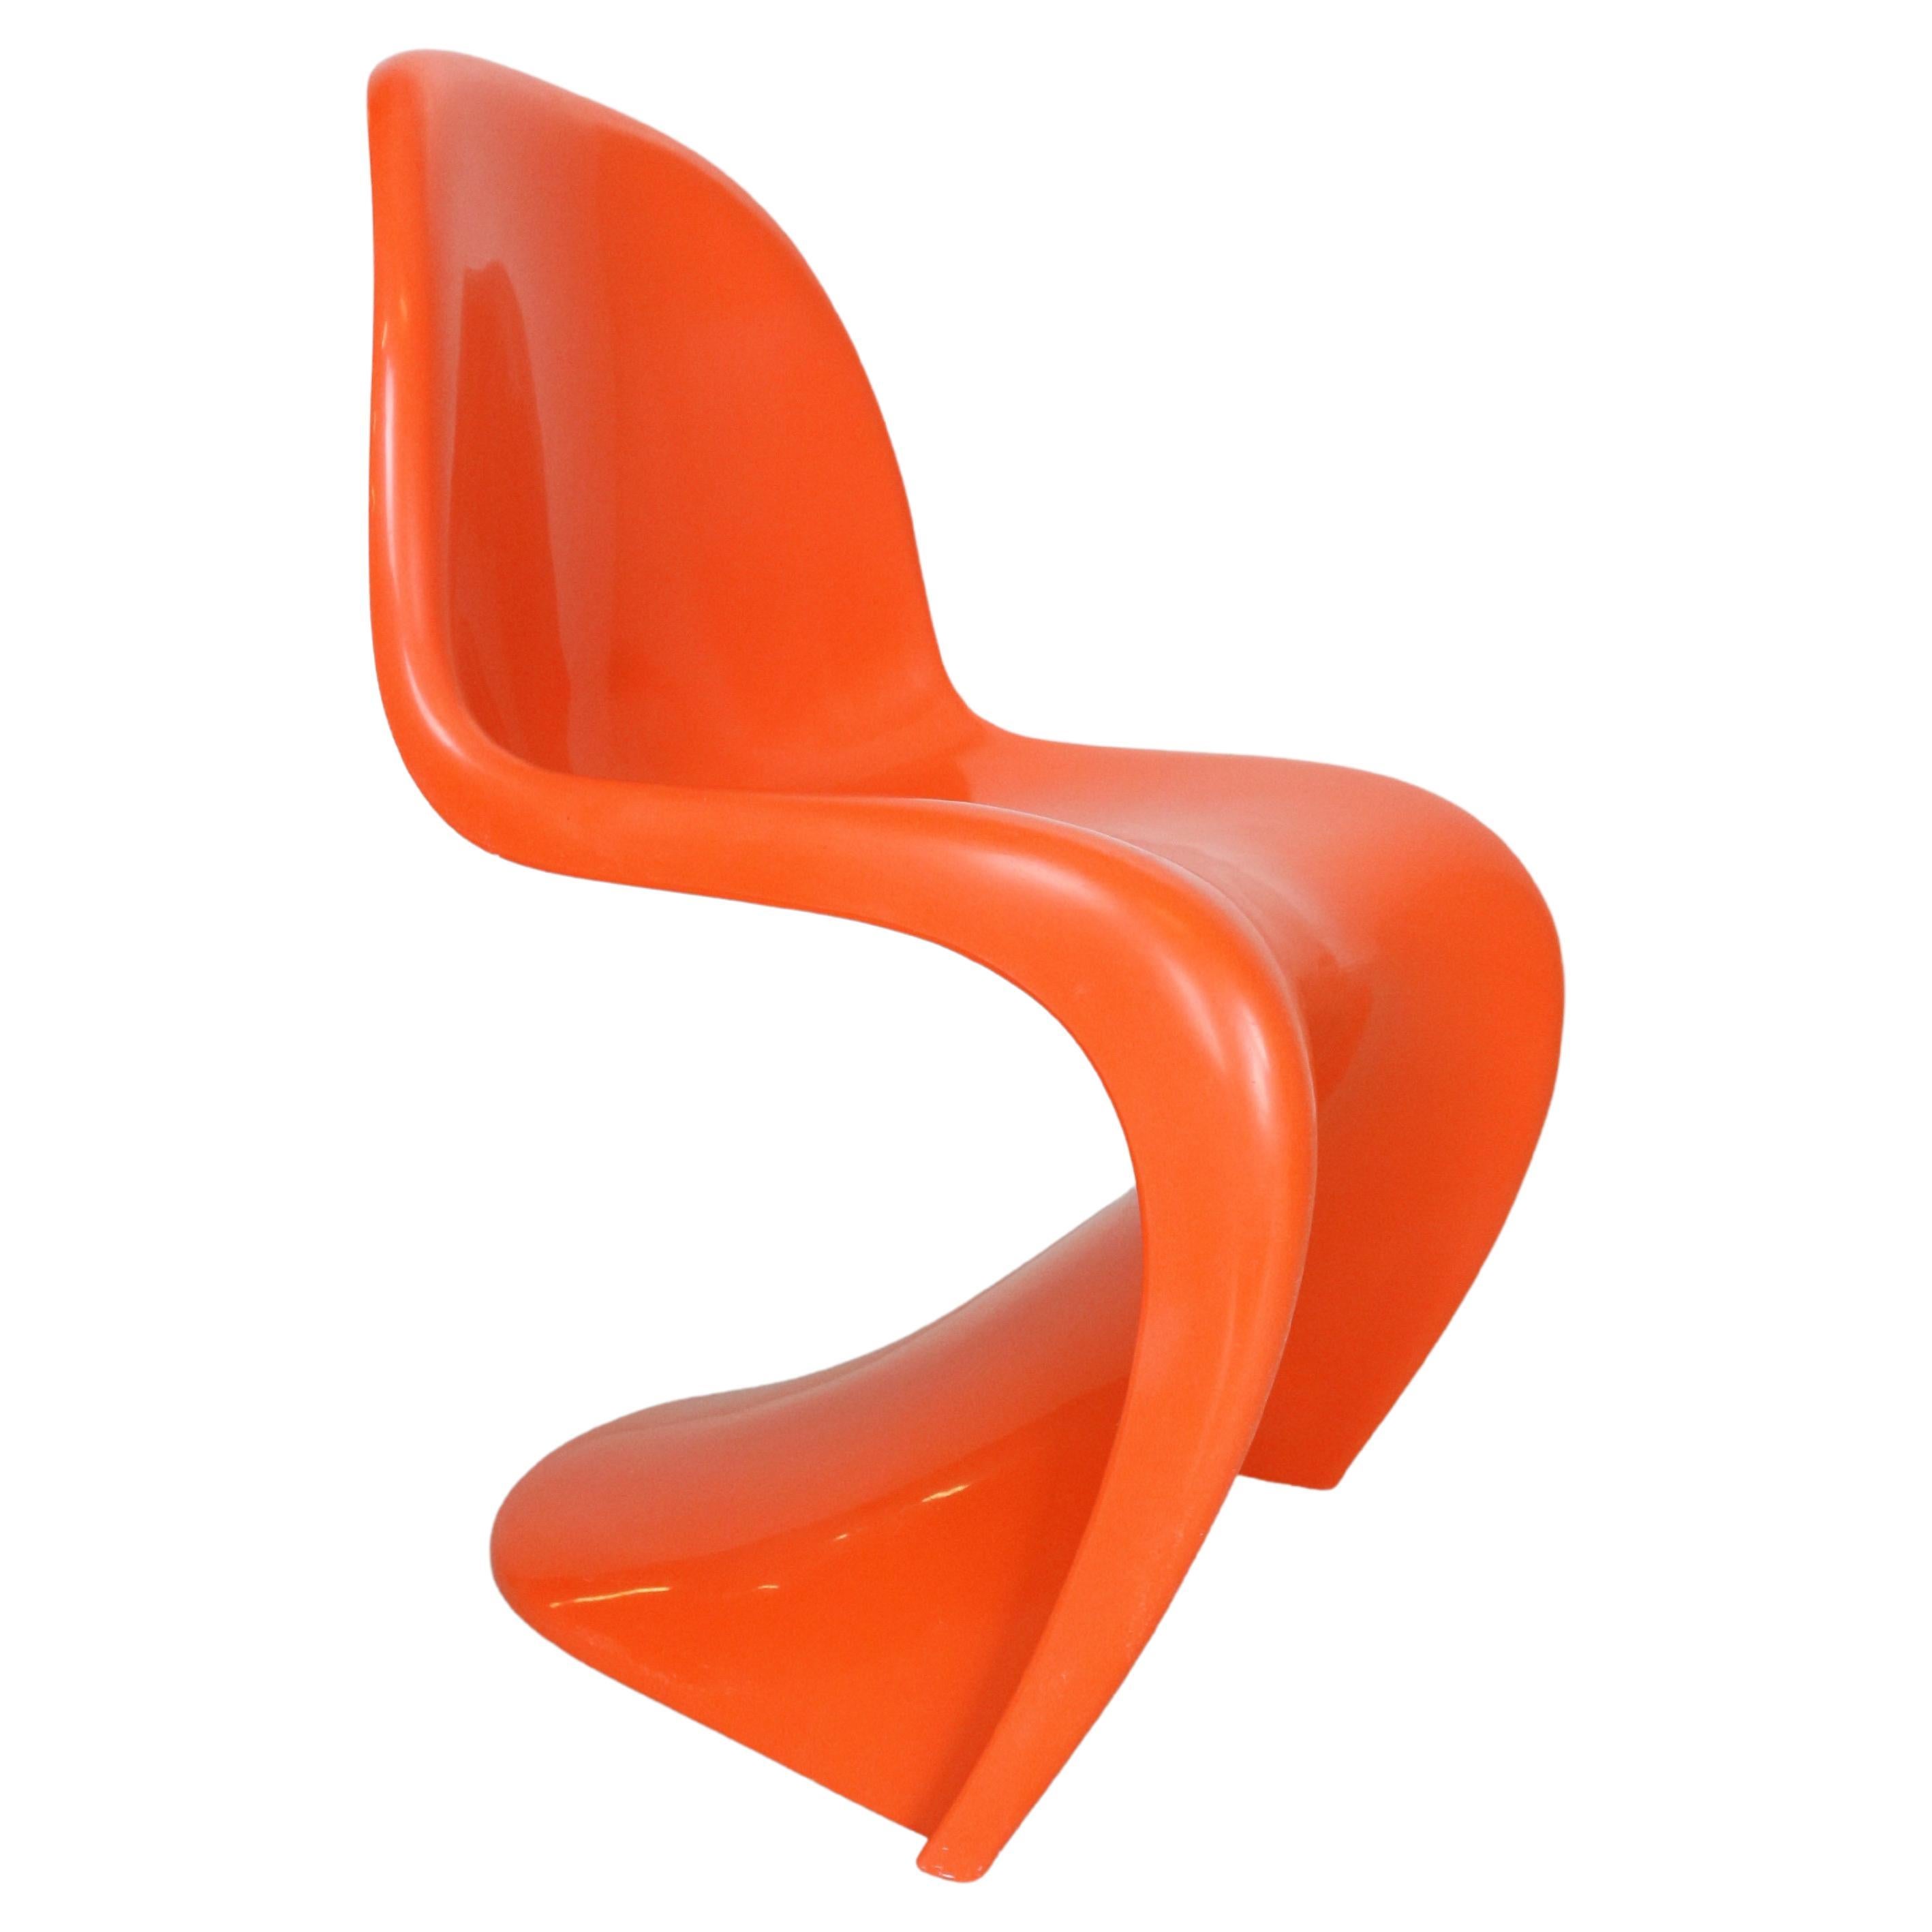 Orange Original Panton S Chairs by Verner Panton for Herman Miller, 1968